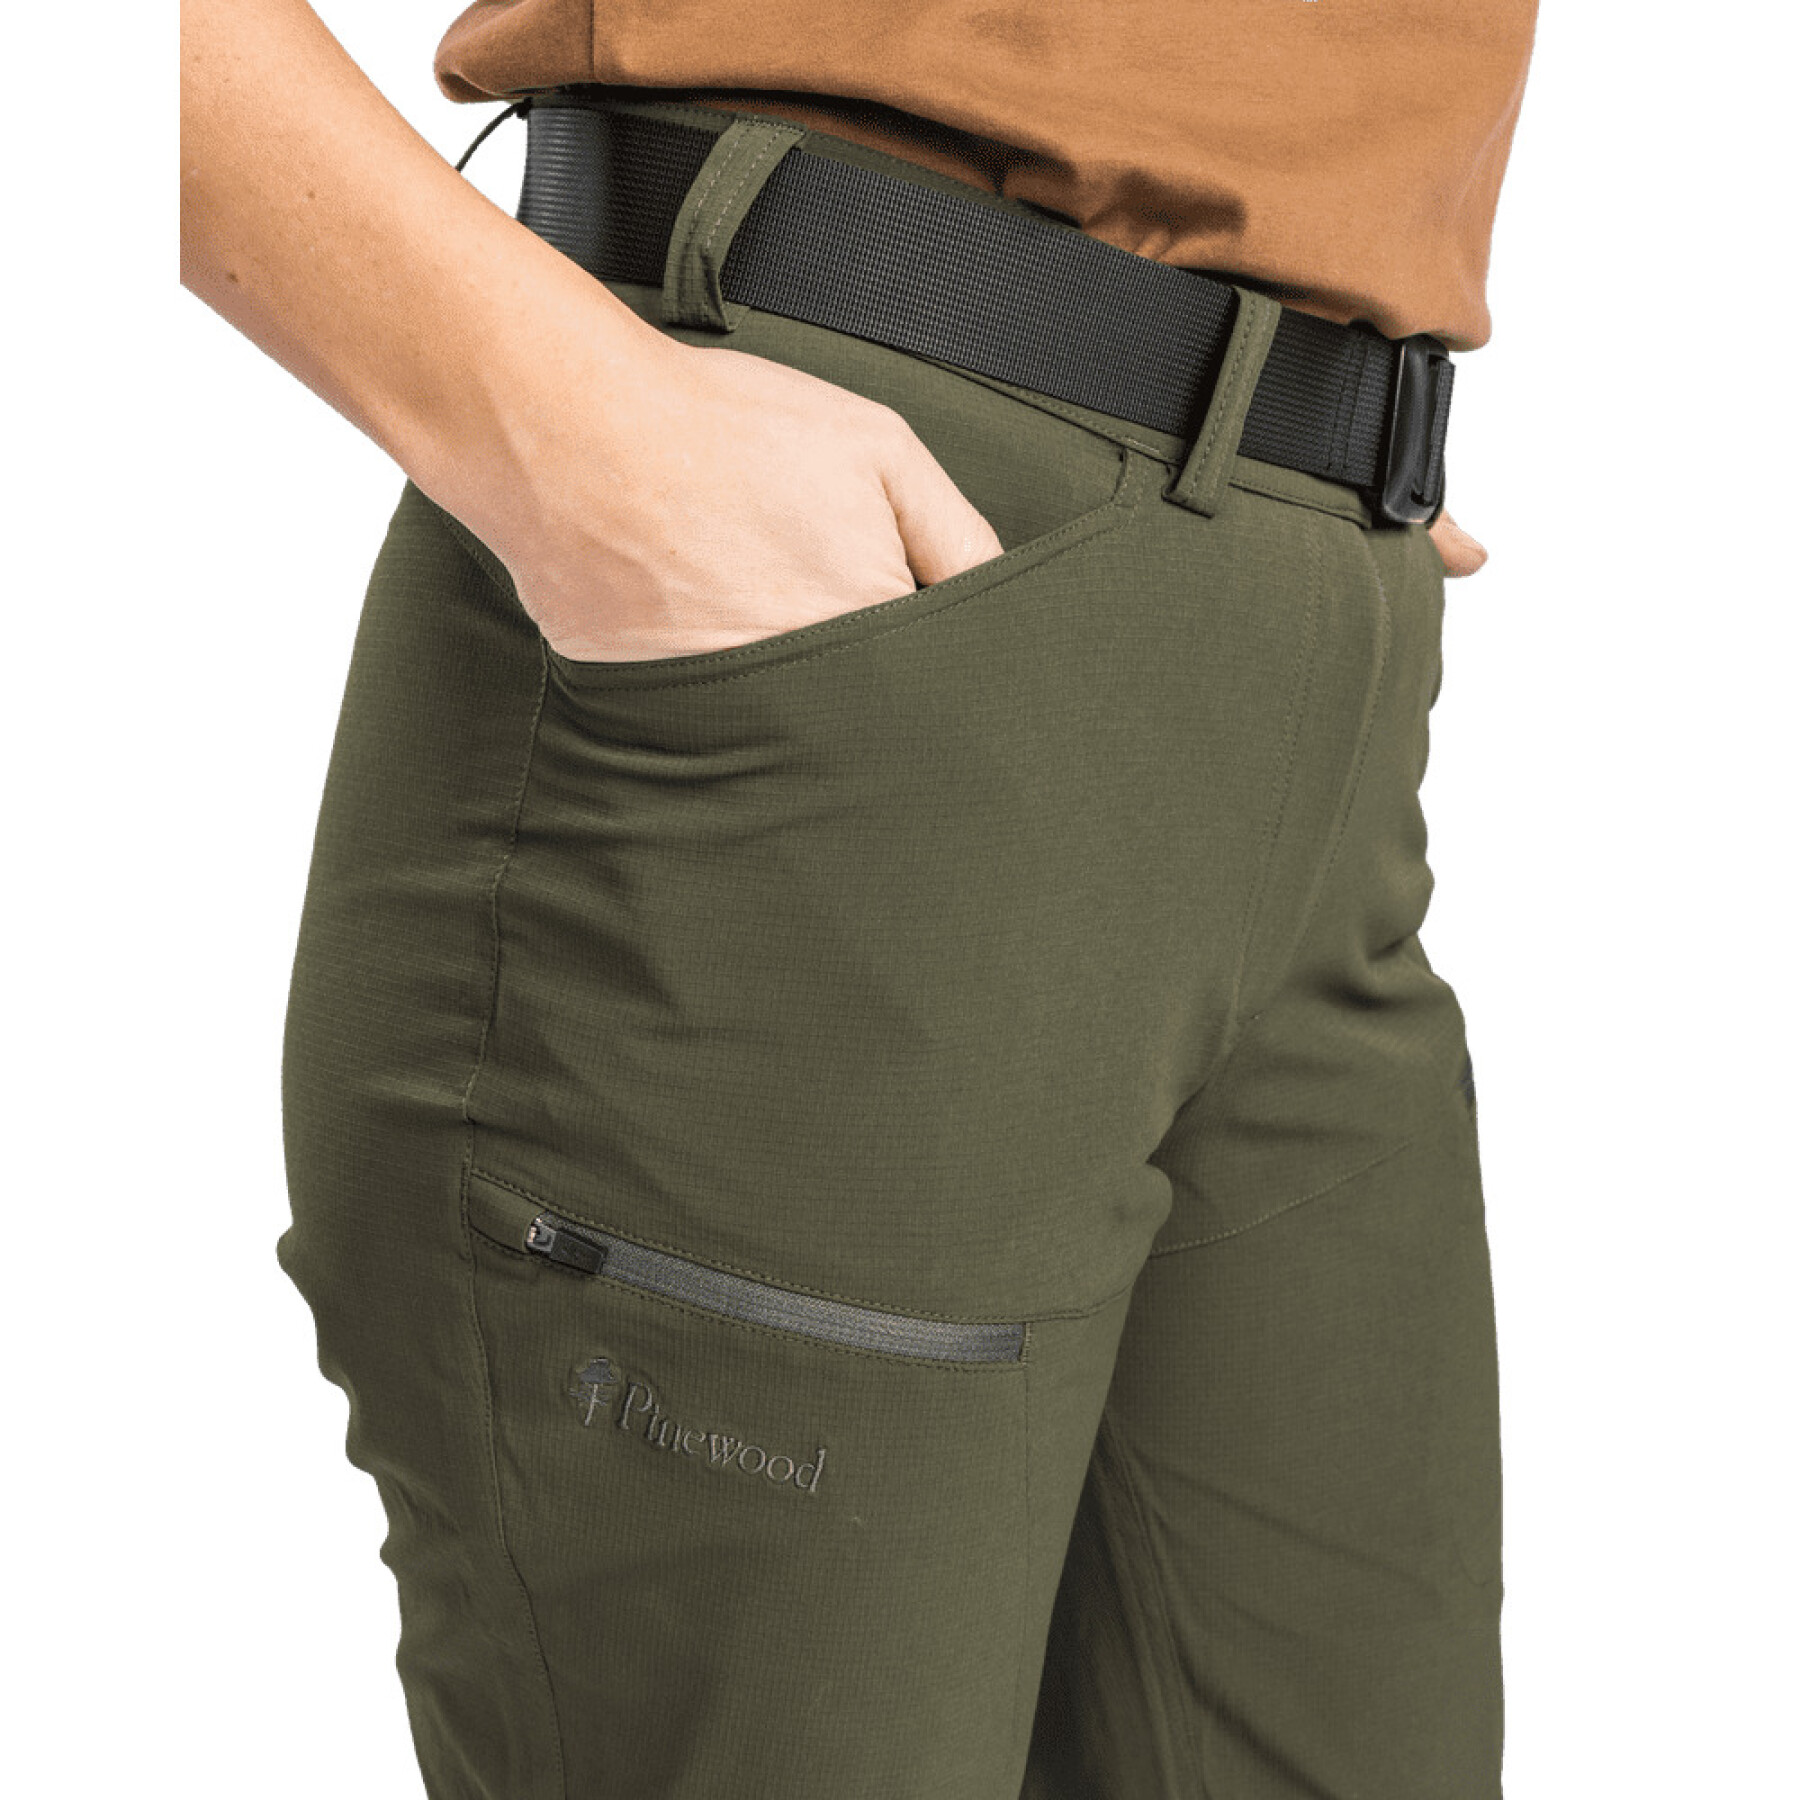 Women's pants Pinewood InsectSafe